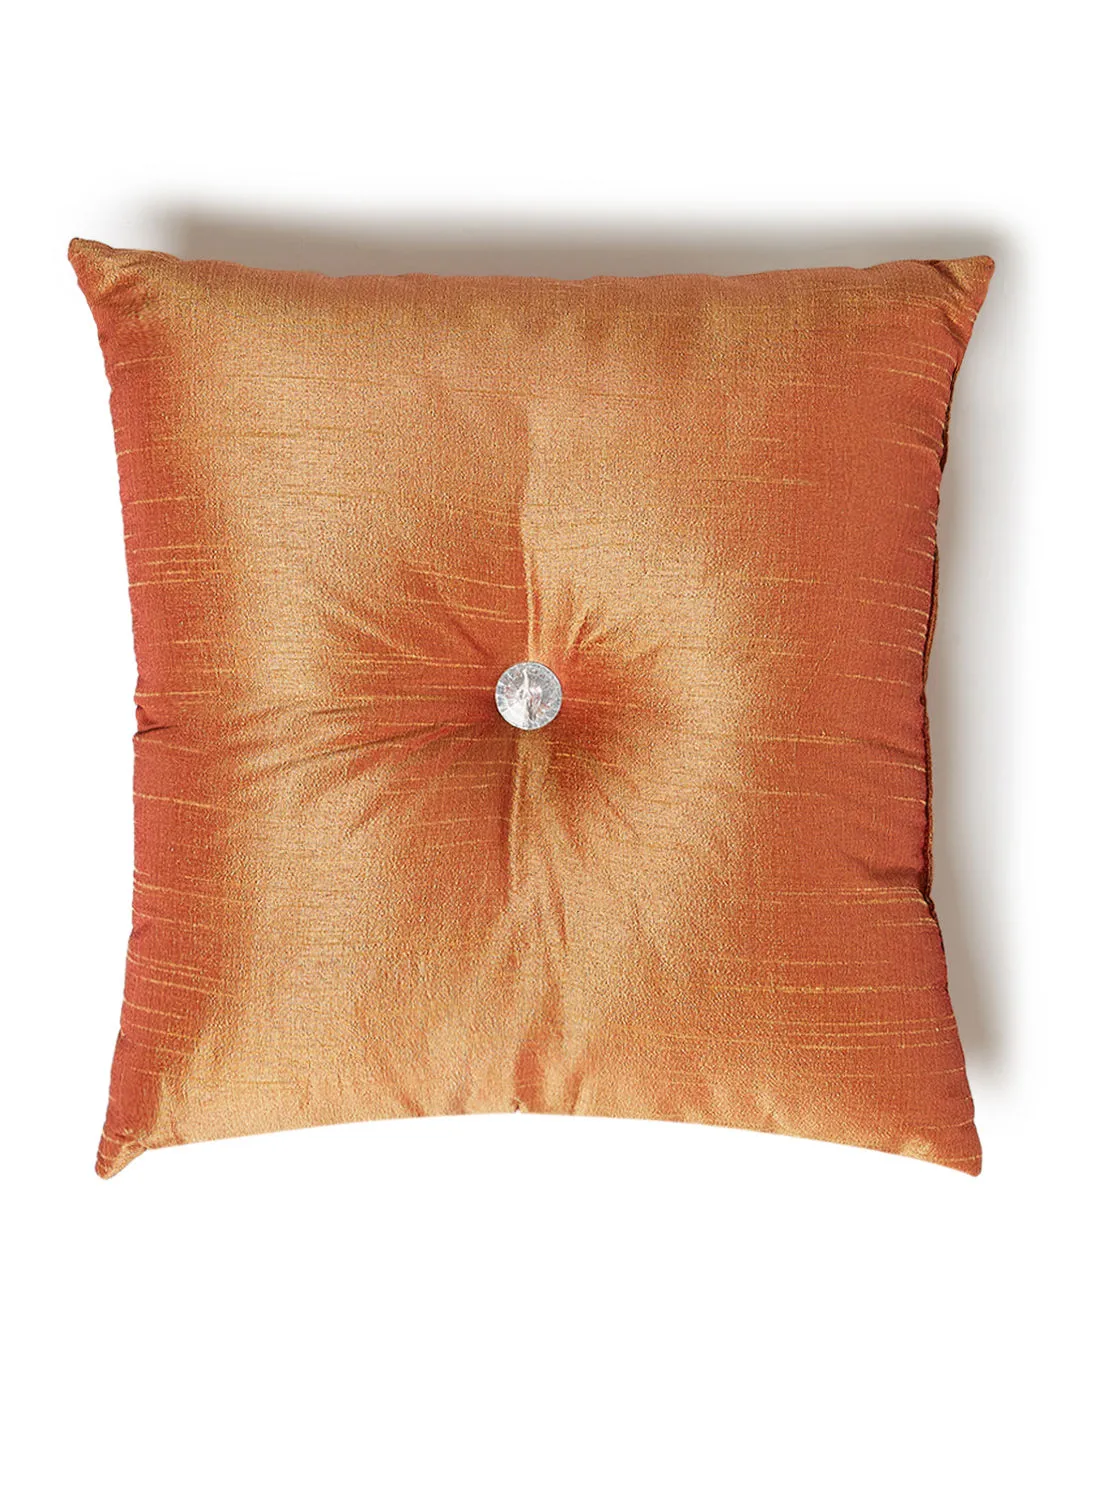 Hometown Decorative Cushion , Size 30X30 Cm Shimmery Dark Orange - 100% Polyester Bedroom Or Living Room Decoration